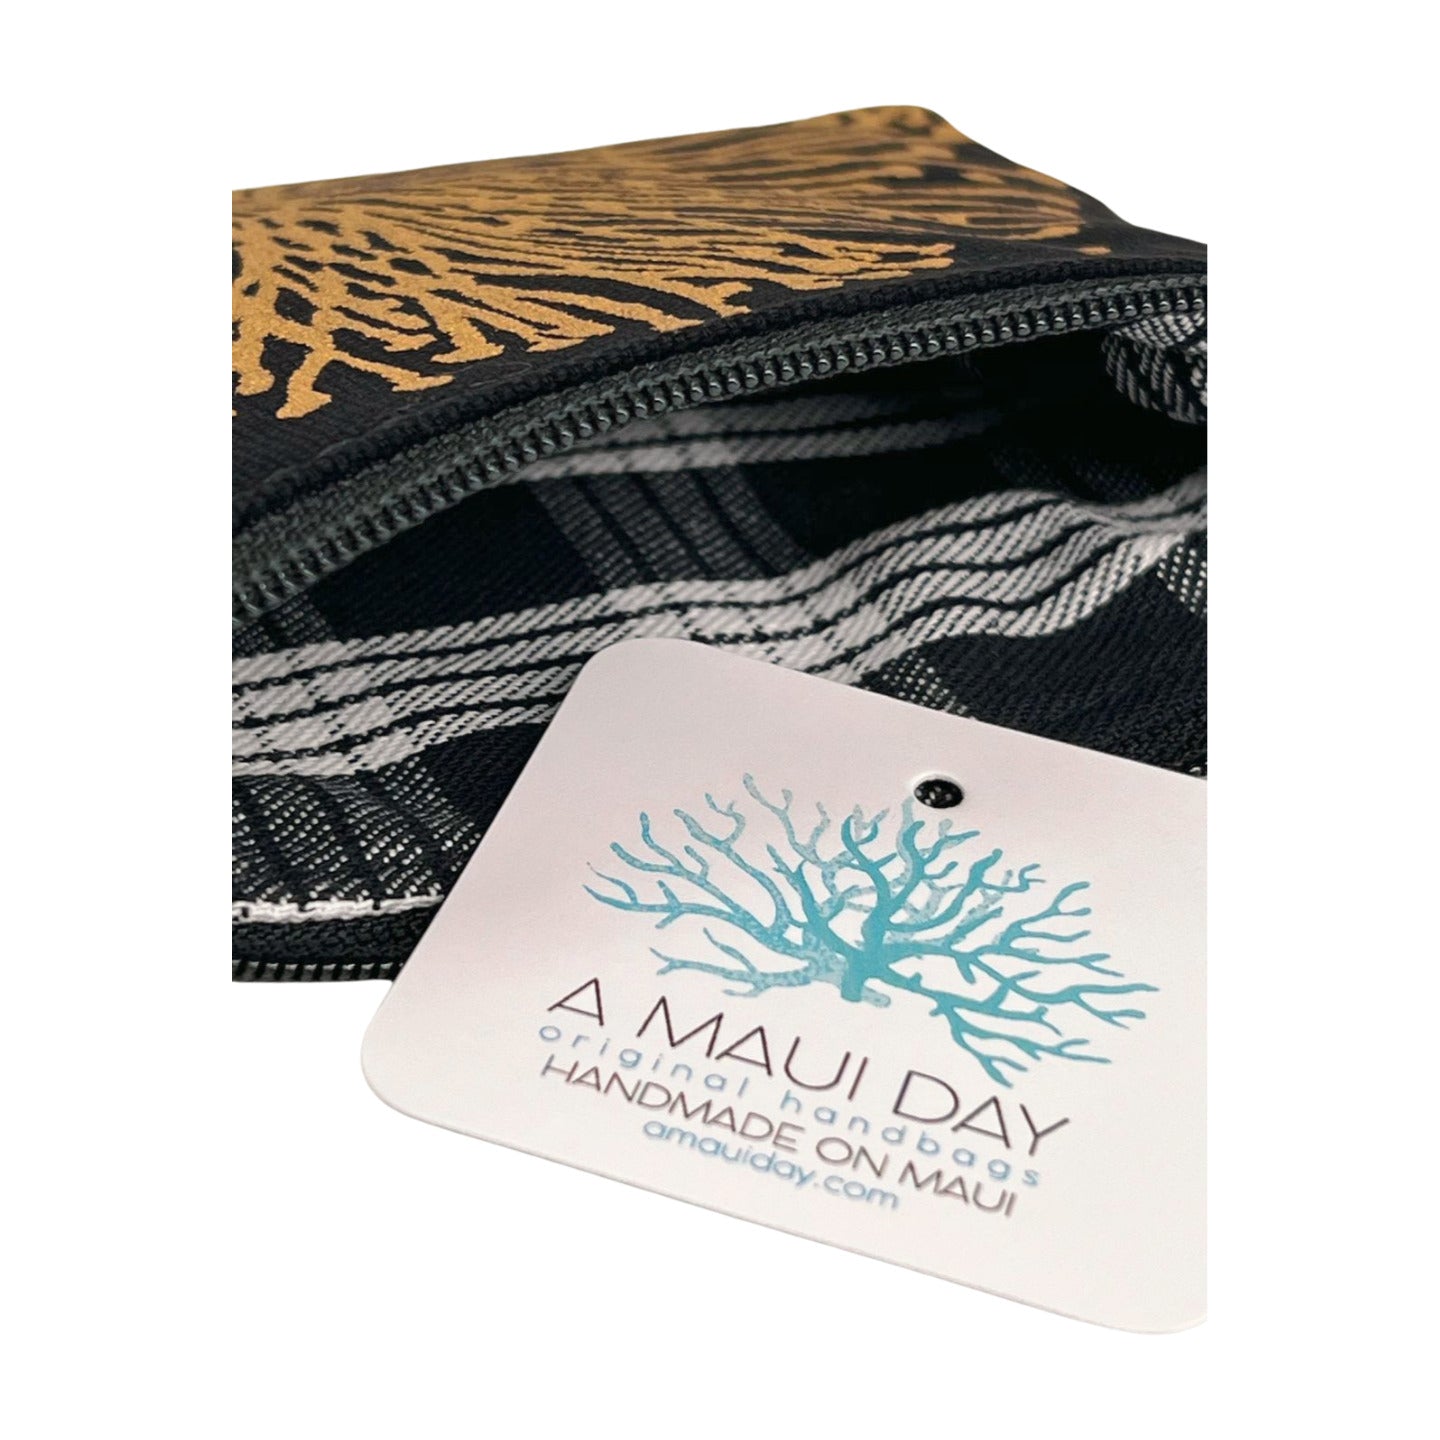 Pop-Up Mākeke - A Maui Day Original Handbags - Handprinted Mini Handbag - Gold ‘Ohi’a on Black Canvas - Inside